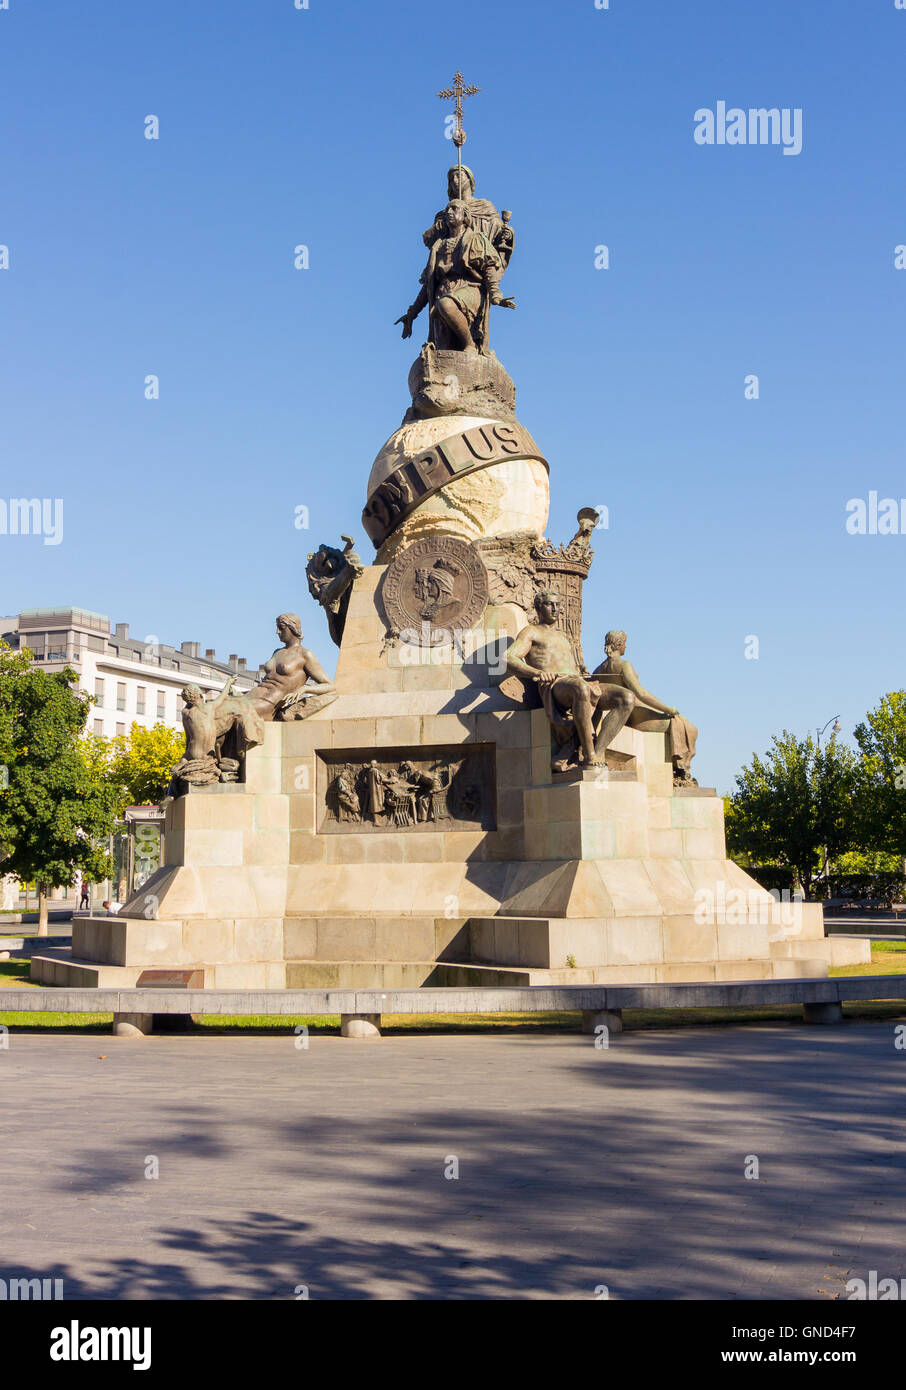 Estatua monumento a Colón en Valladolid, España Foto de stock